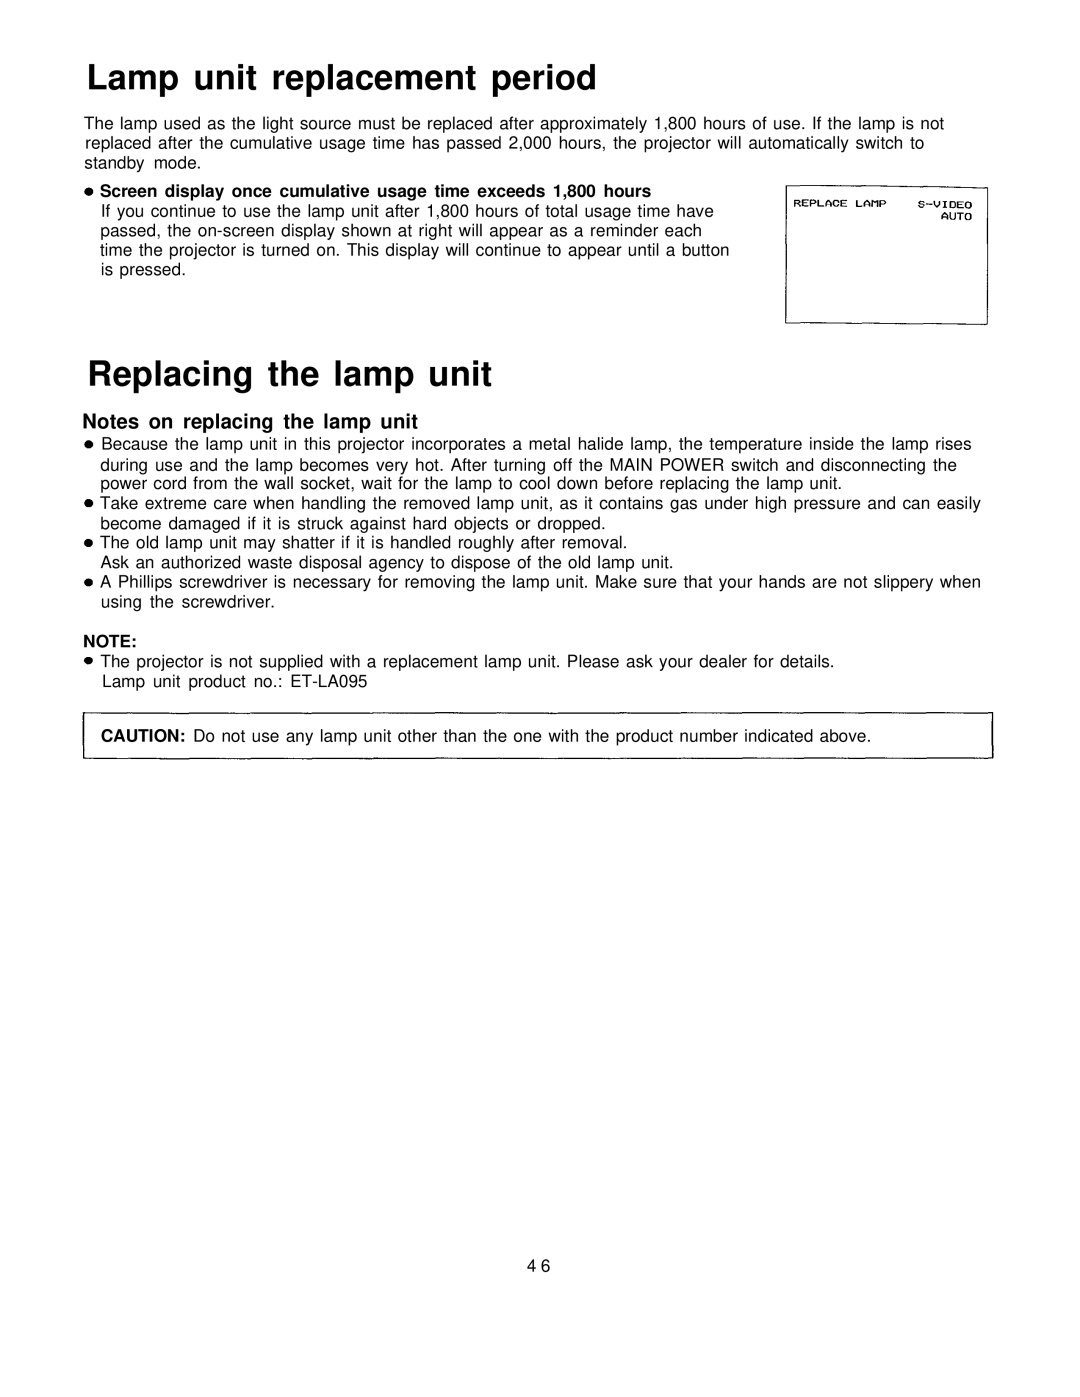 Panasonic PT-L795U manual Lamp unit replacement period, Replacing the lamp unit, Notes on replacing the lamp unit 